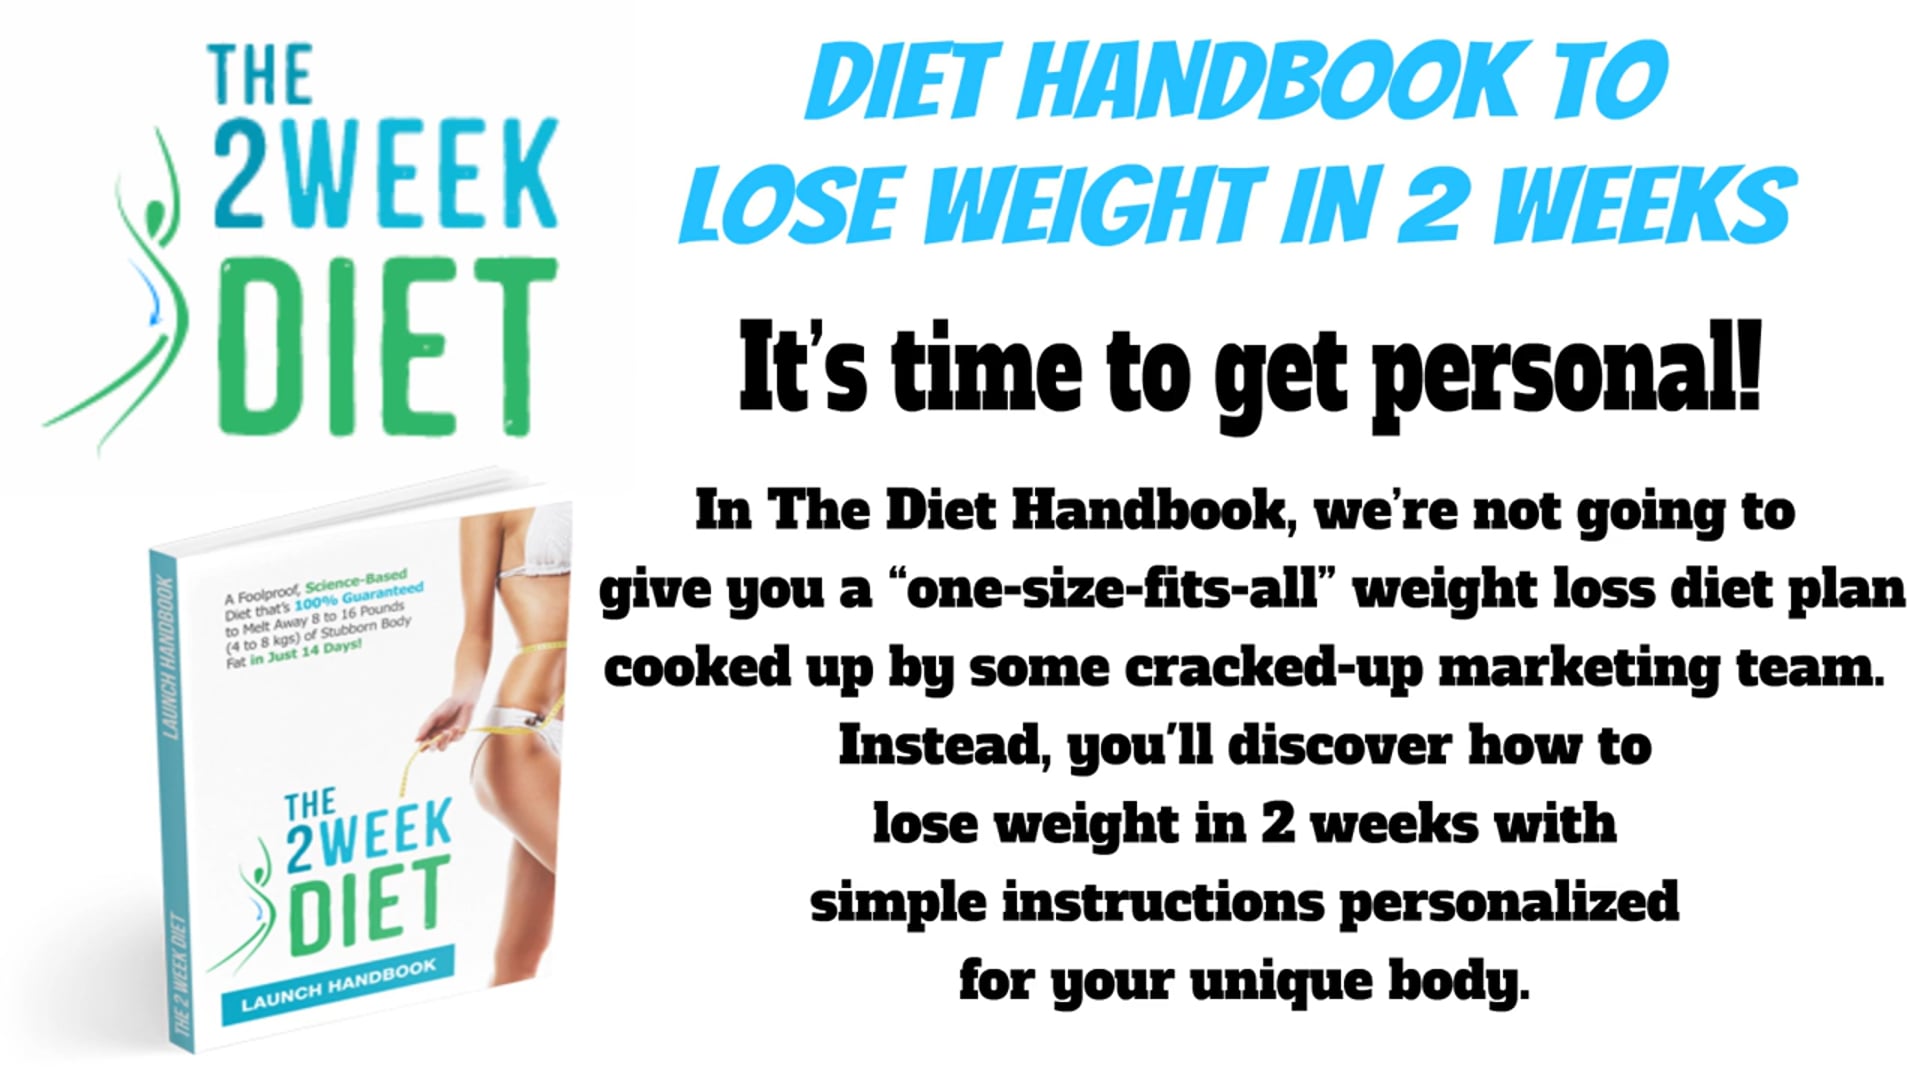 [FREE] DIET HANDBOOK TO LOSE WEIGHT IN 2 WEEKS – clickbank review